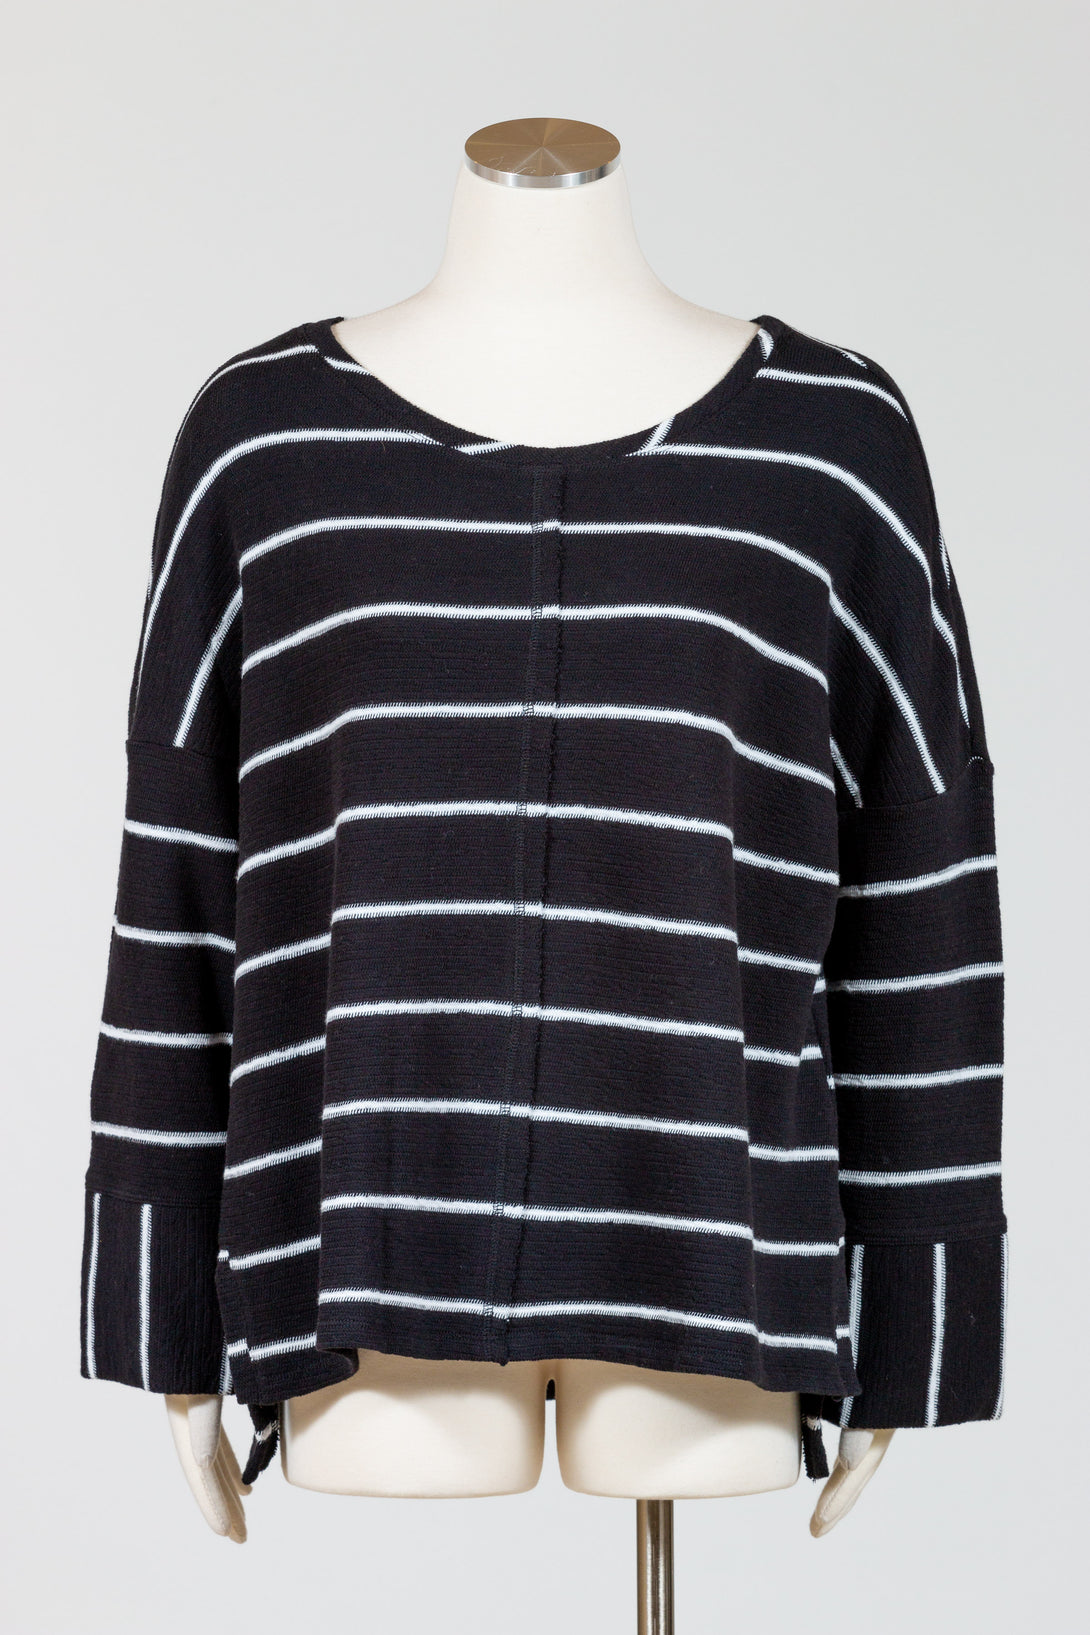 Habitat-Striped-Boxy-Sweater-FrenchTerry-Black-White-Stripe